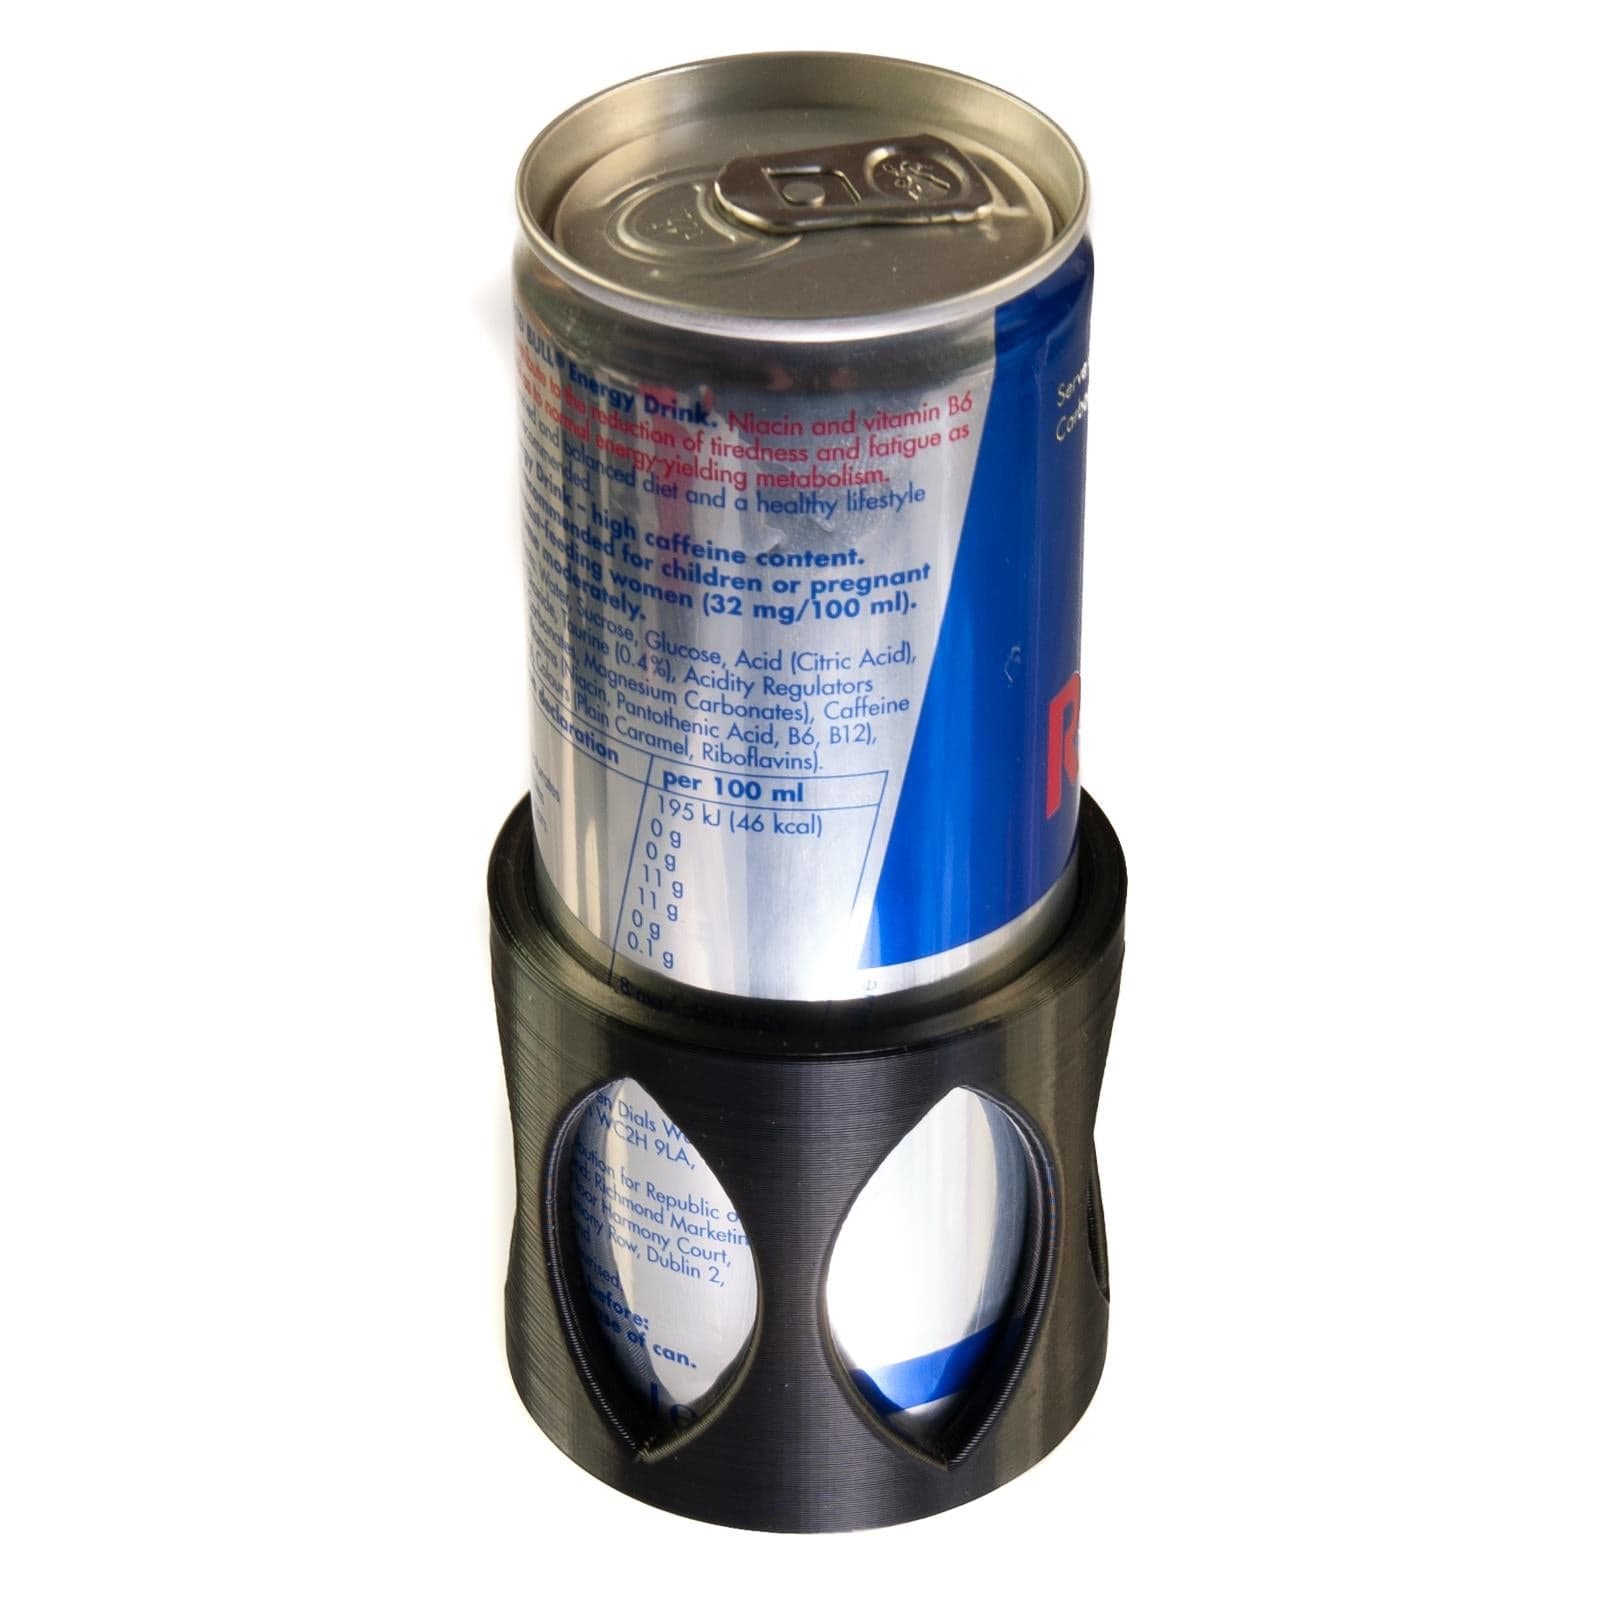 250ml Drink Can Cup Holder Adaptor / Reducer for Car, Van or Pram 63mm Diameter Service Item Thunderfix 902092